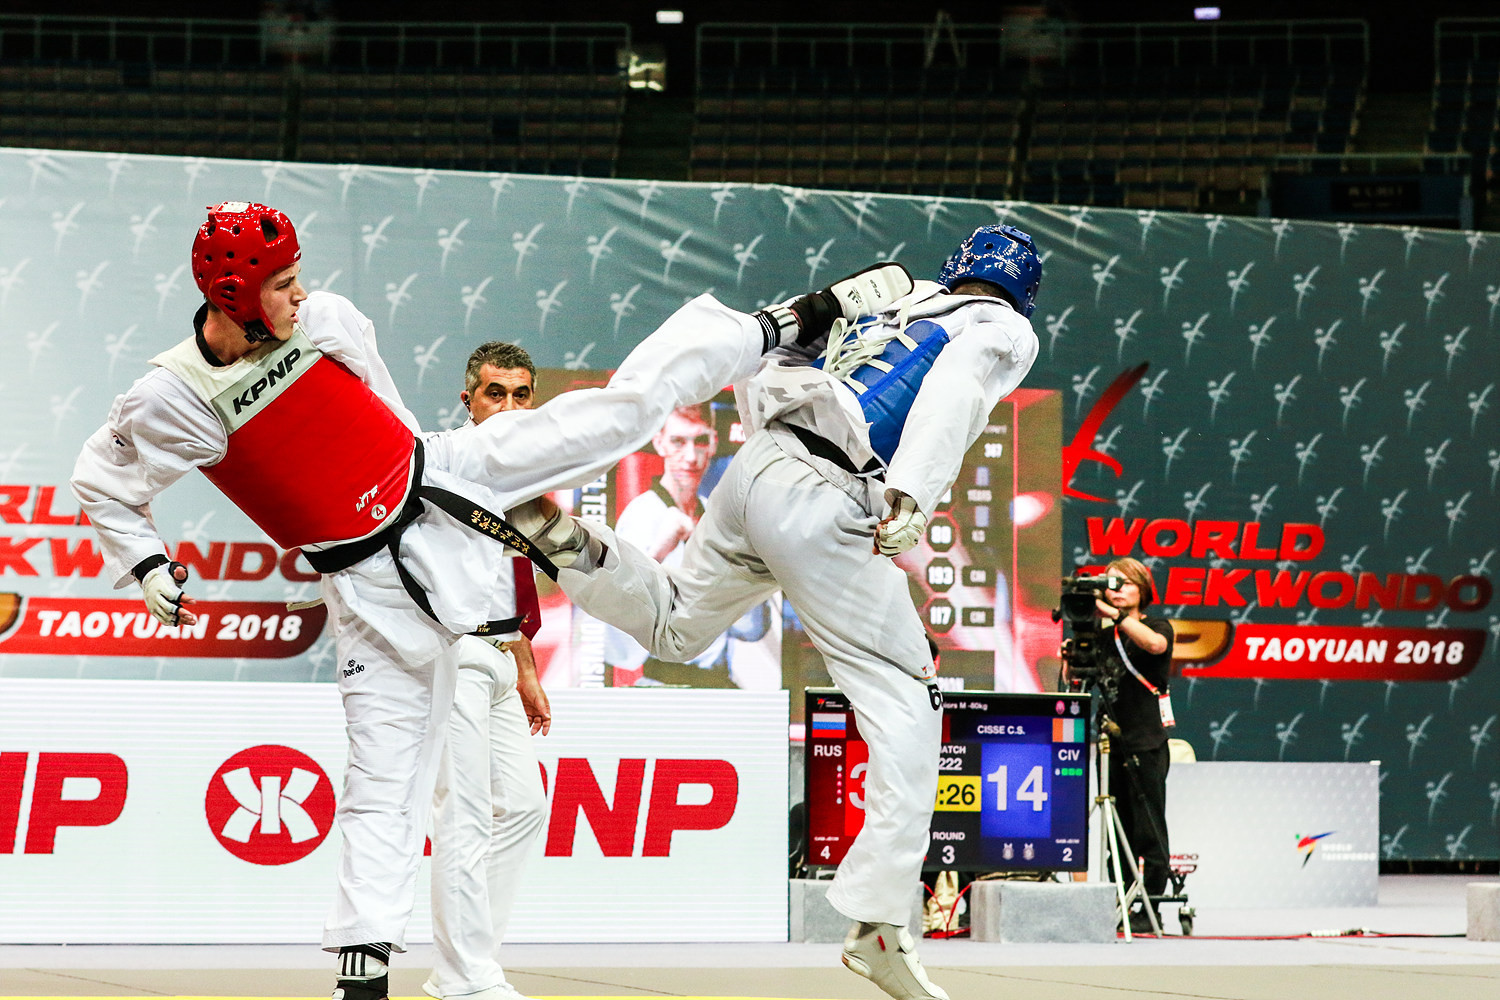 Olympic champion Cissé beaten to men's under-80kg title at World Taekwondo Grand Prix in Taoyuan